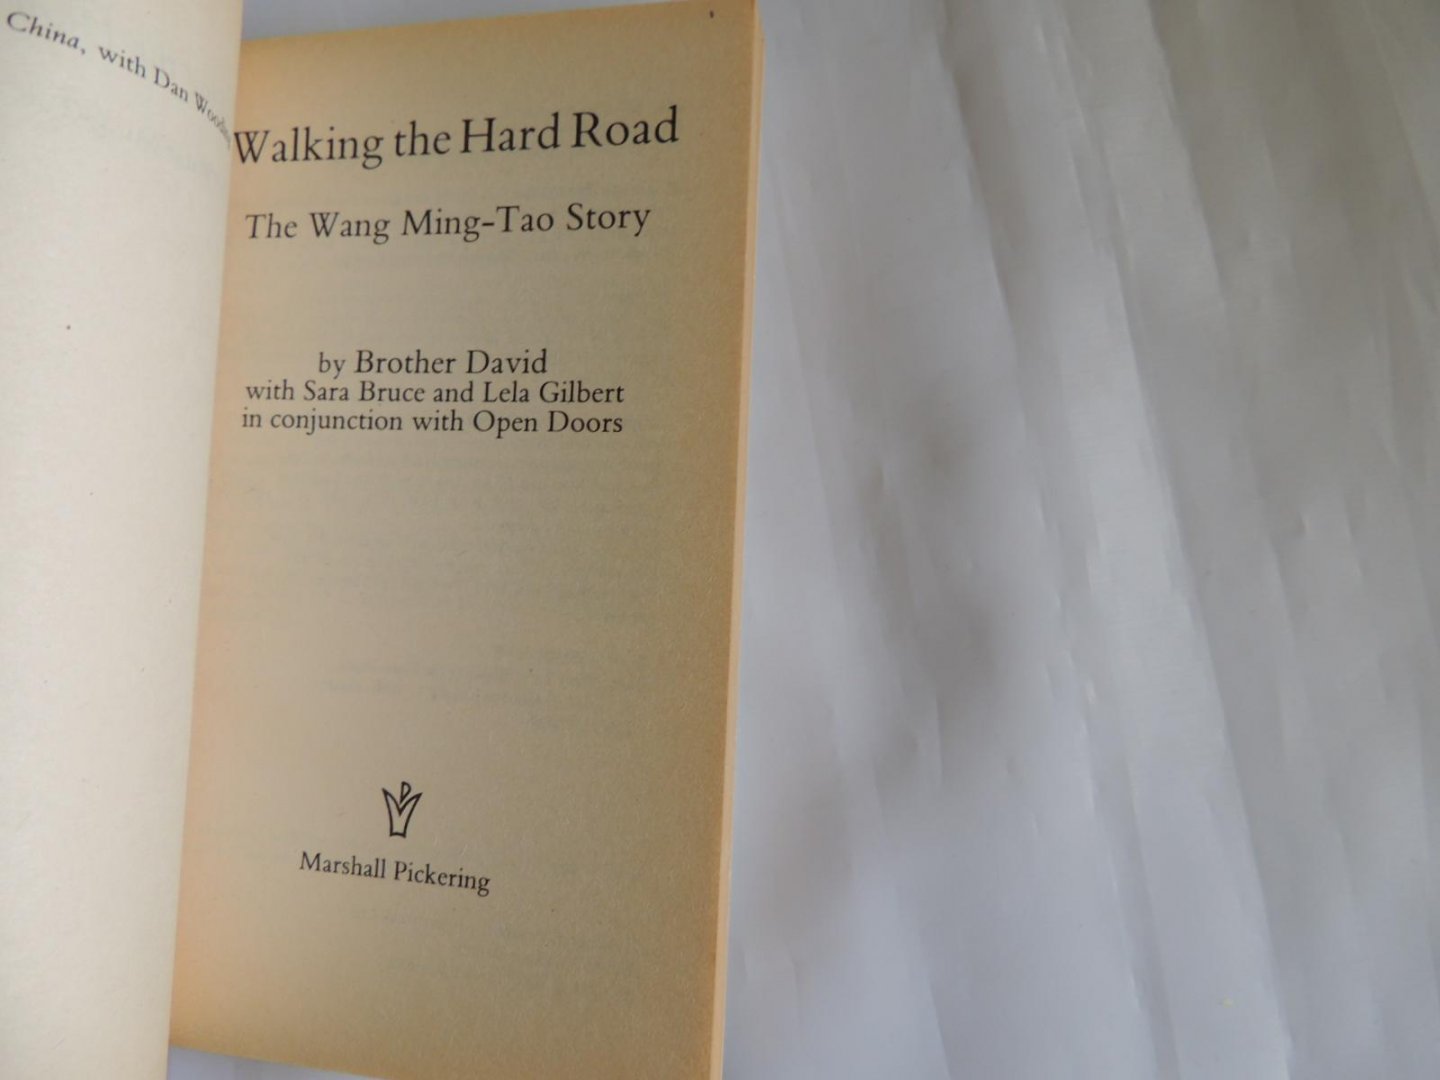 Wang Ming Tao -  Bijl anne van de - open doors, brother david - the Wang Ming Tao story : walking the hard road.